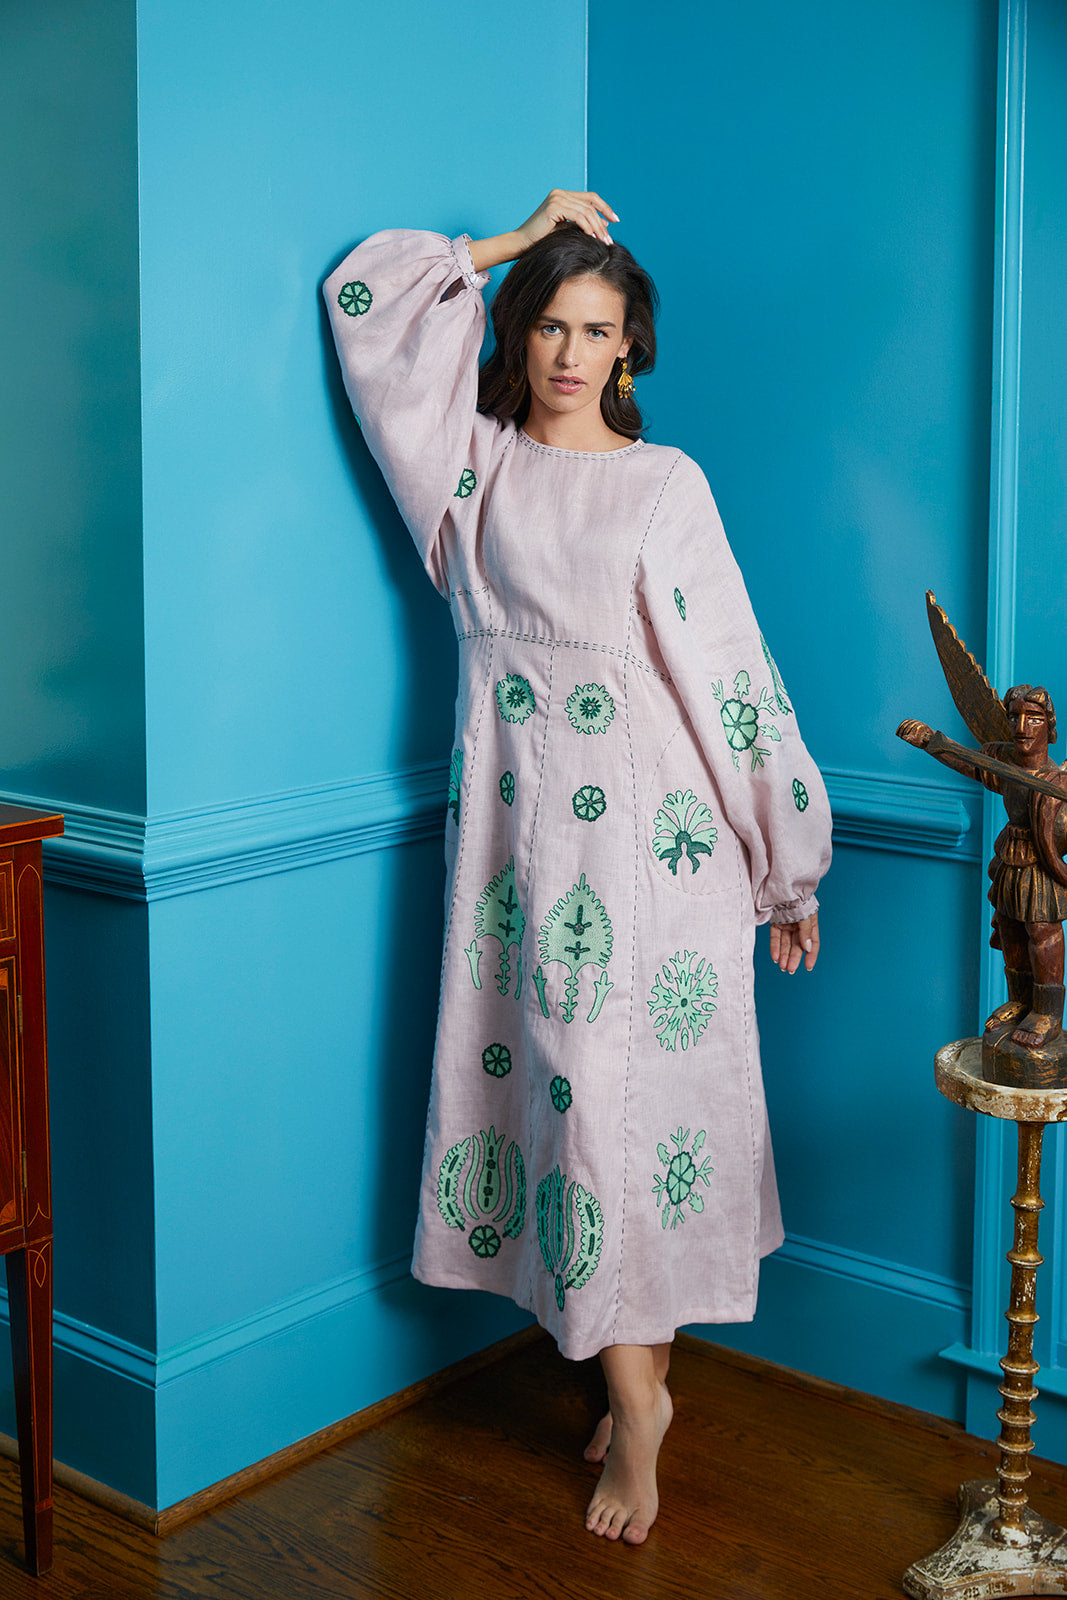 Carolyna Ukrainian Embroidered Dress - Lavender, Mint, Green by Larkin Lane